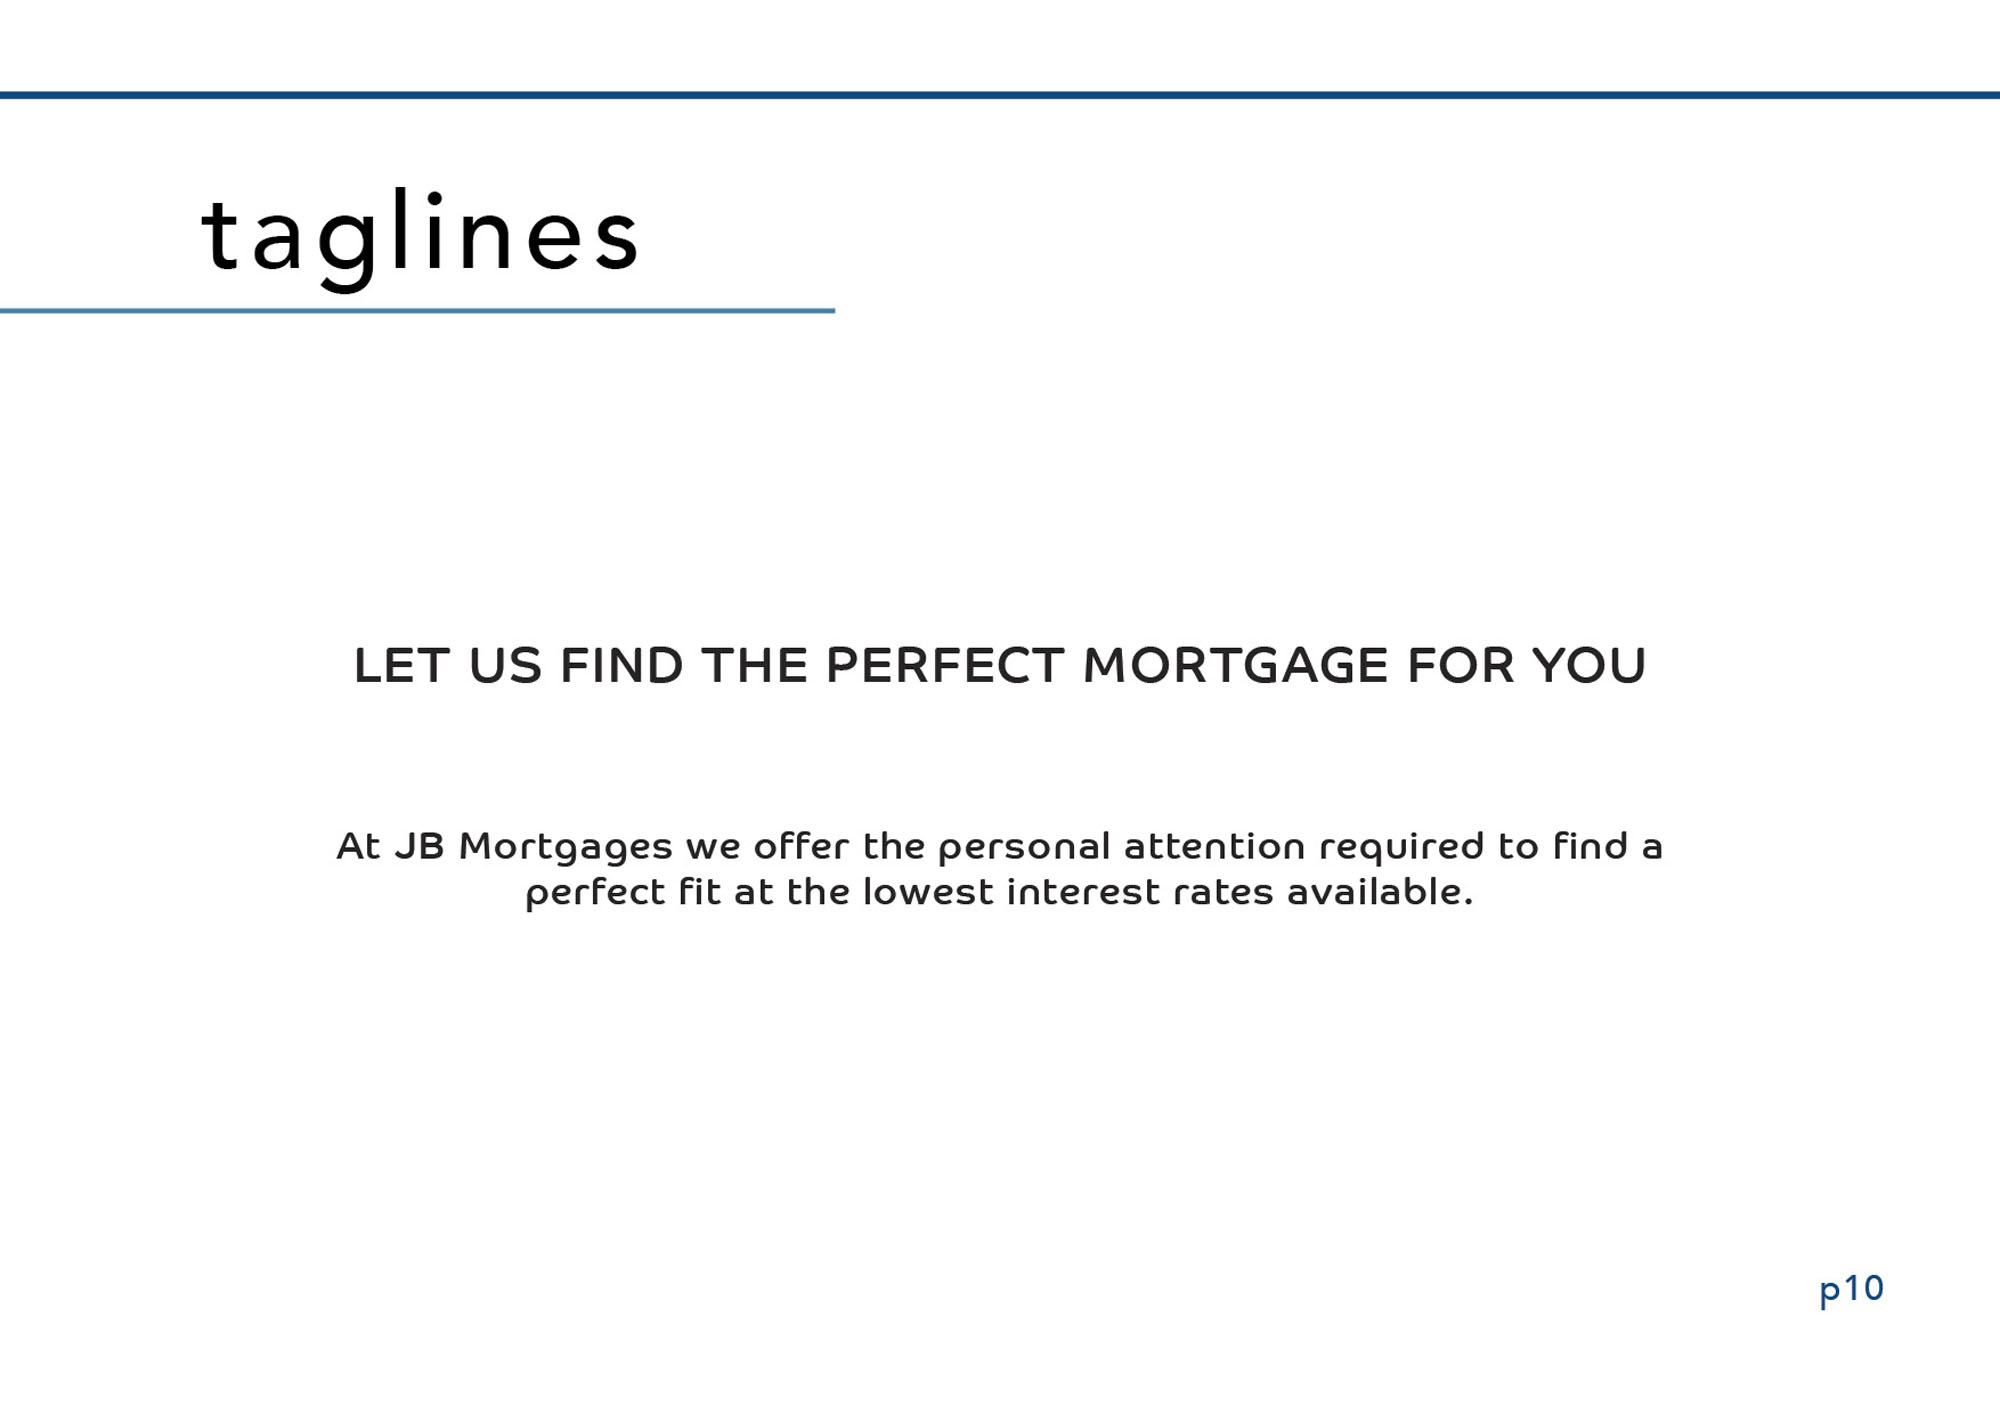 Brand Manual JB Mortgages Branding London Southgate